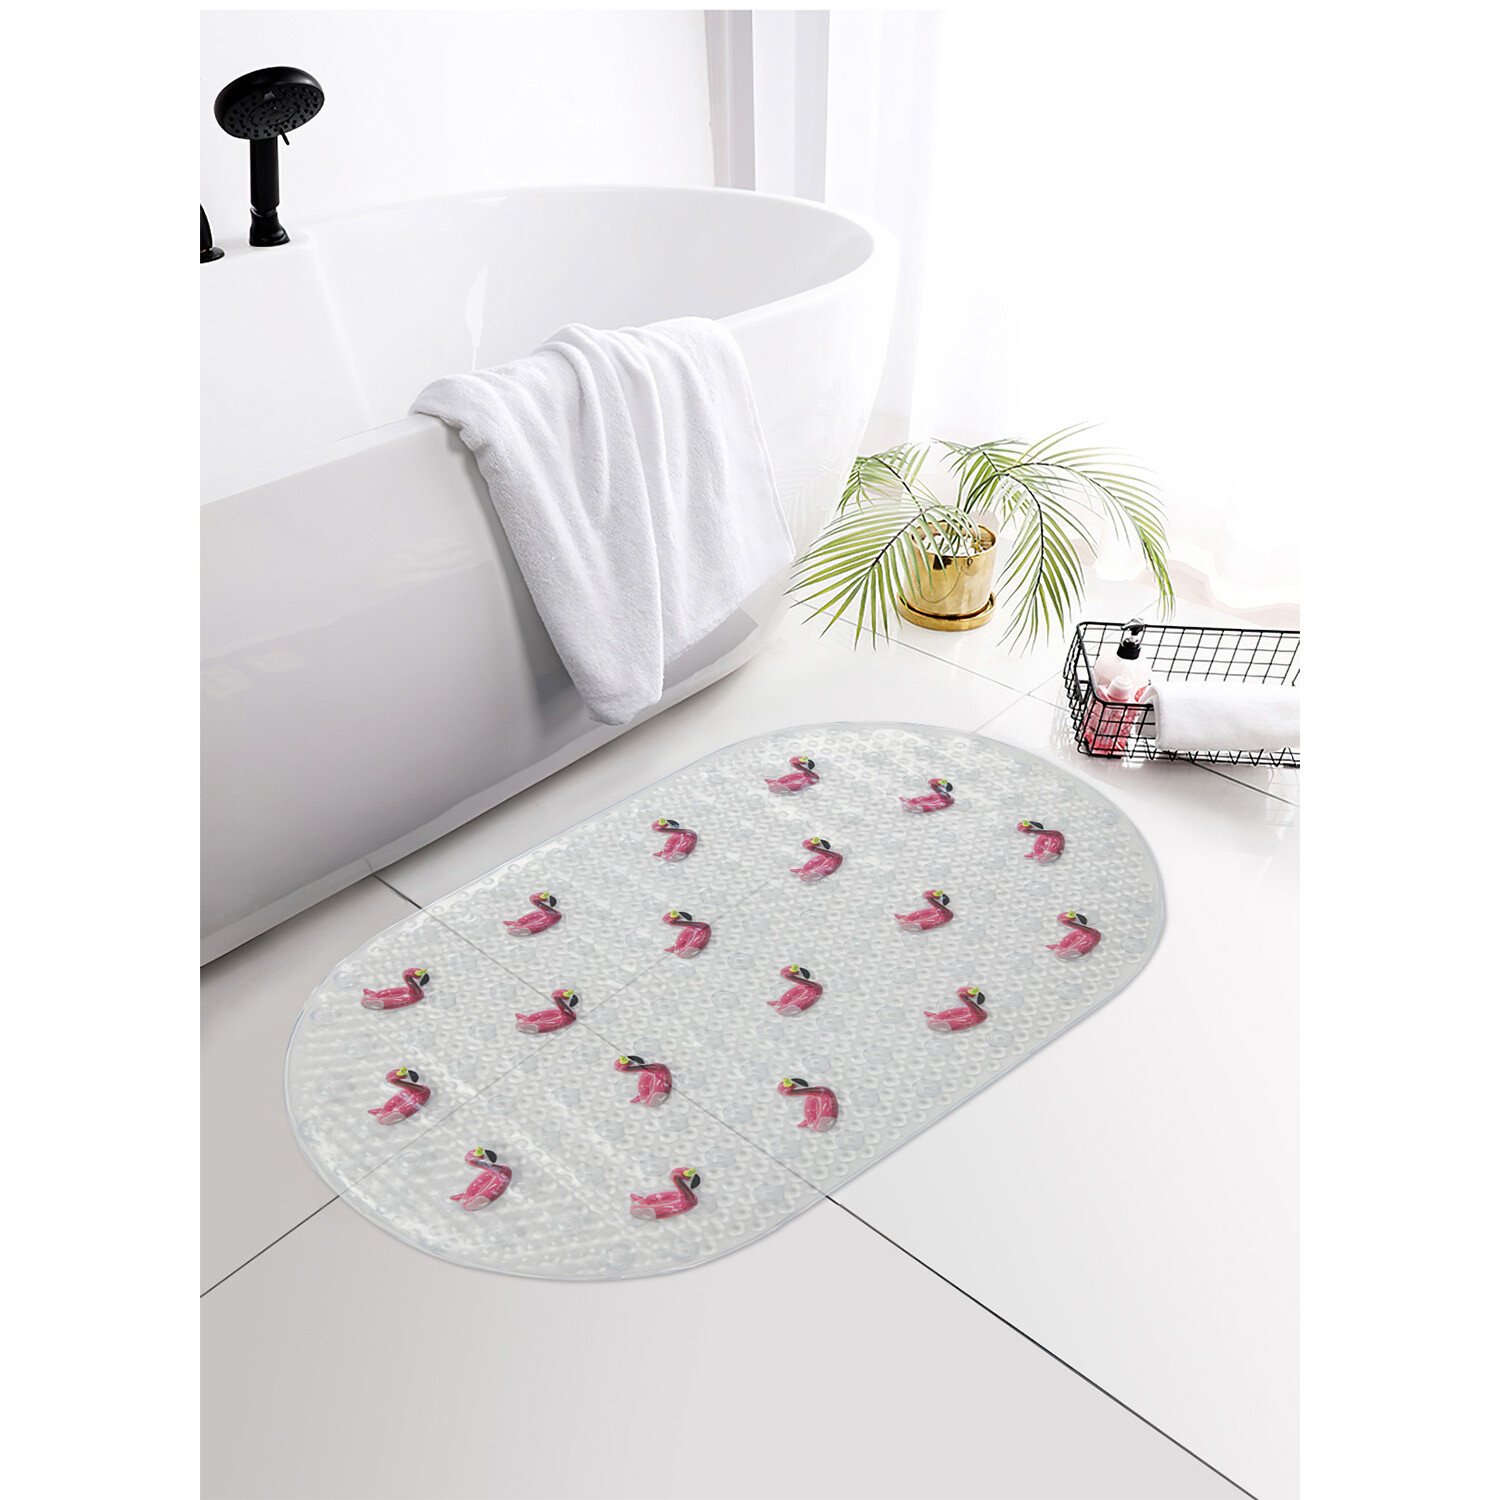 Flamingo PVC Bath Mat Image 2